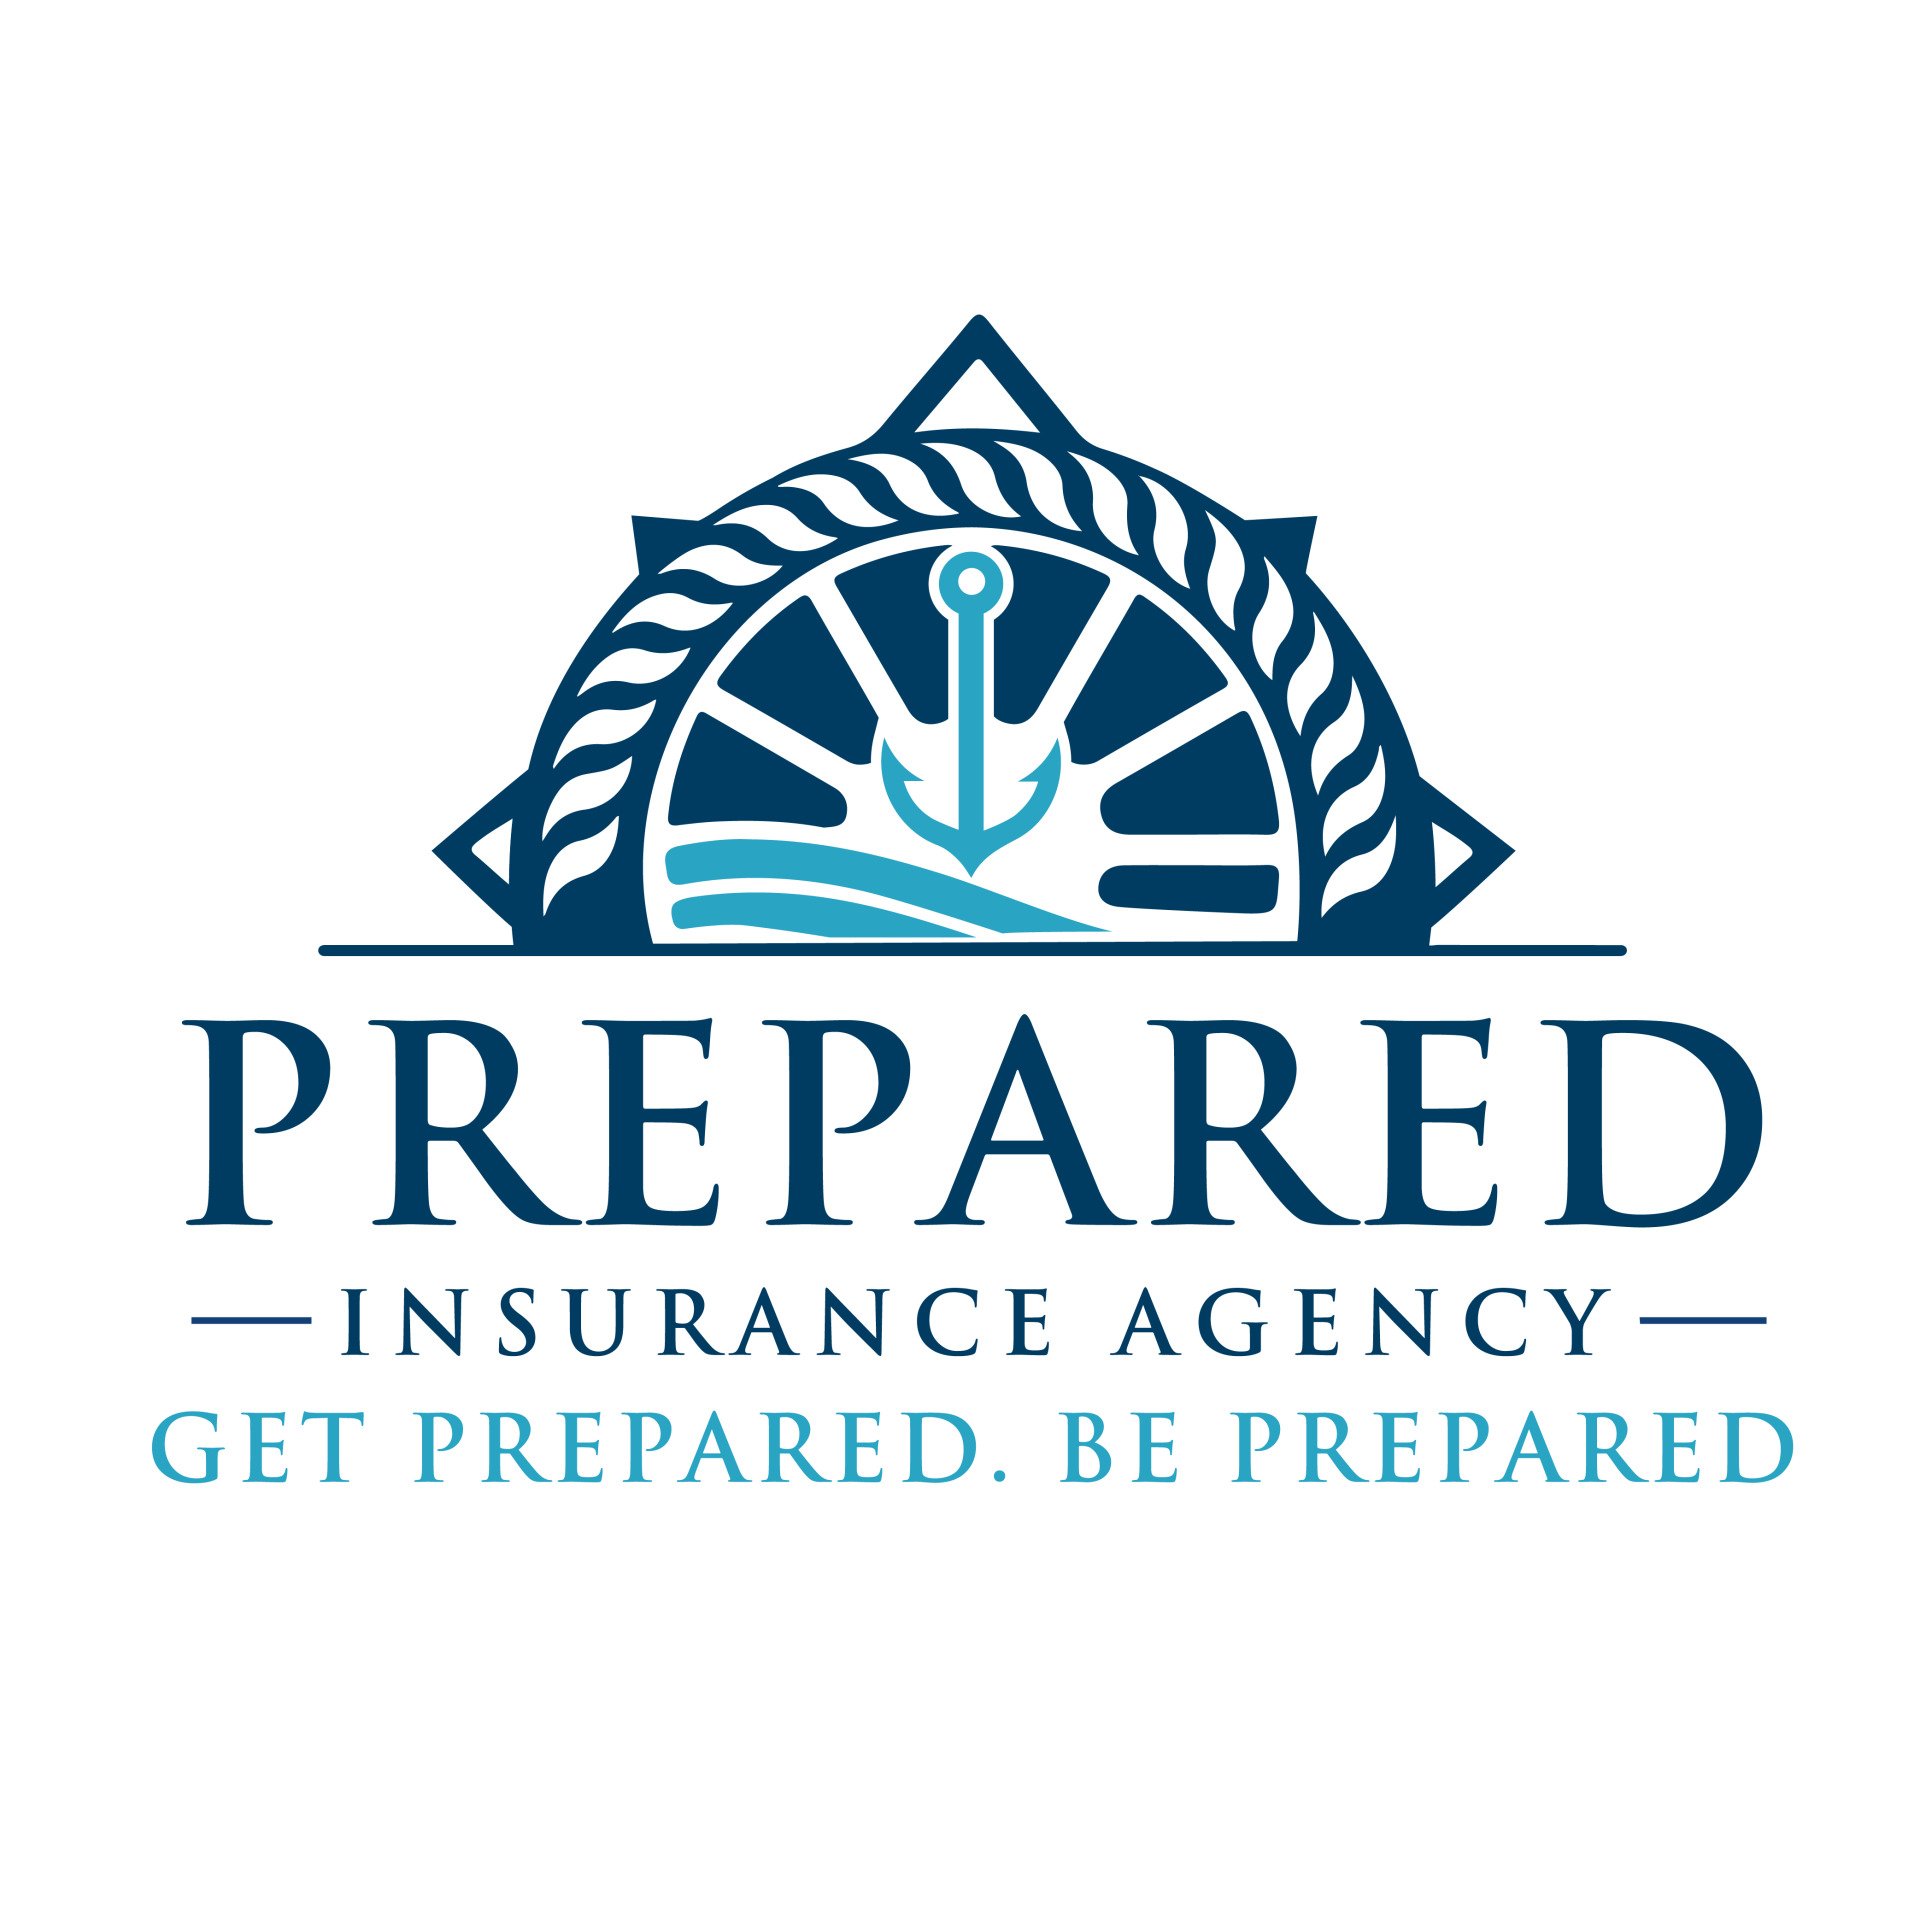 The logo for prepared insurance agency get prepared , be prepared.